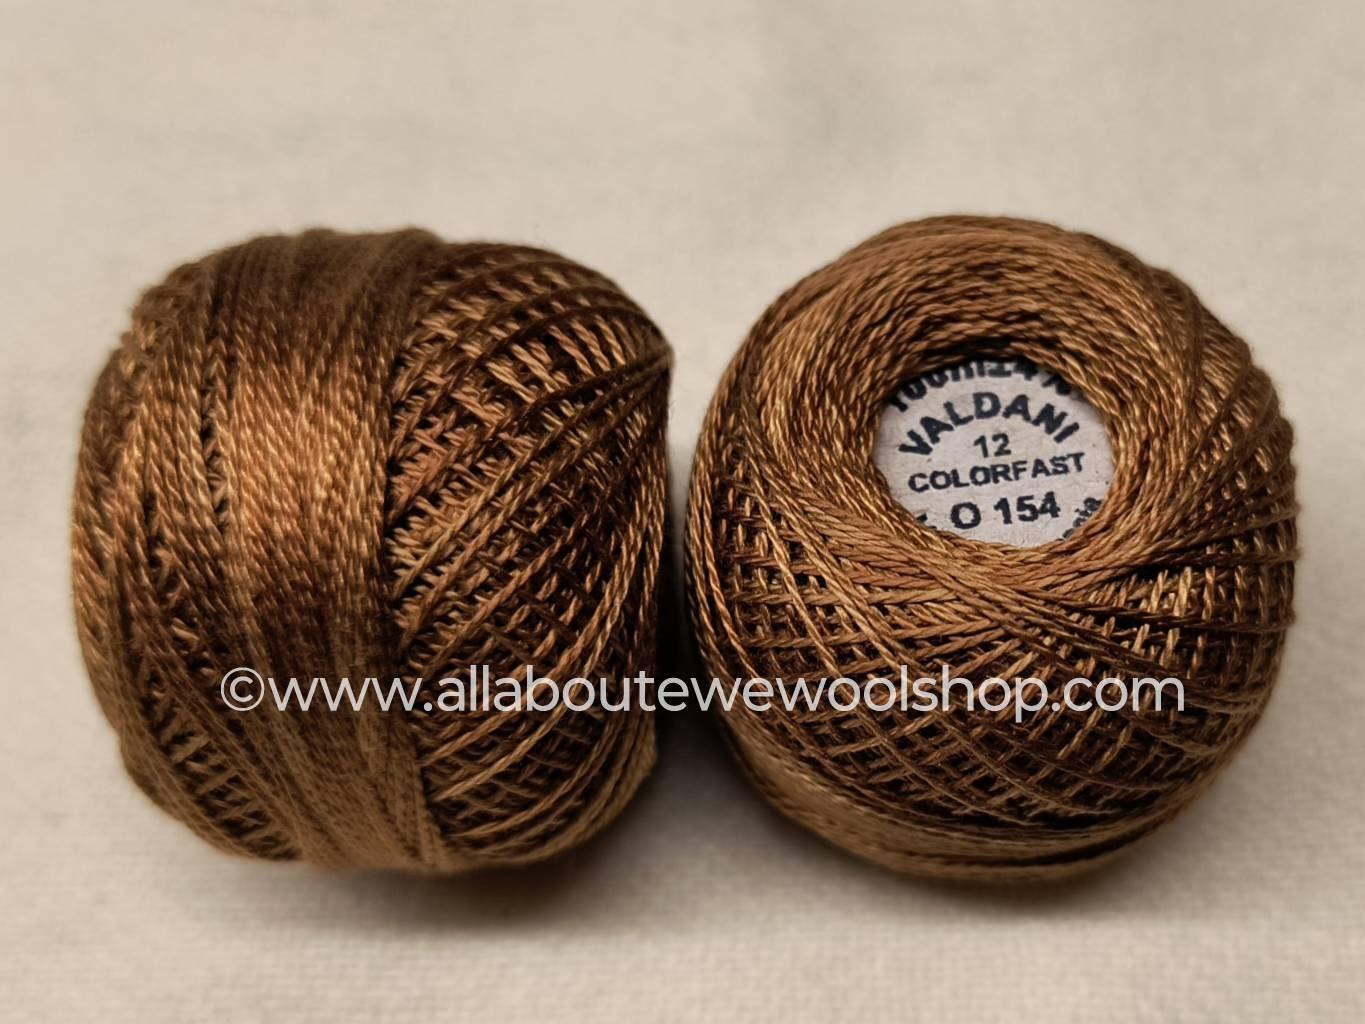 O154 #12 Valdani Pearl/Perle Cotton Thread - All About Ewe Wool Shop